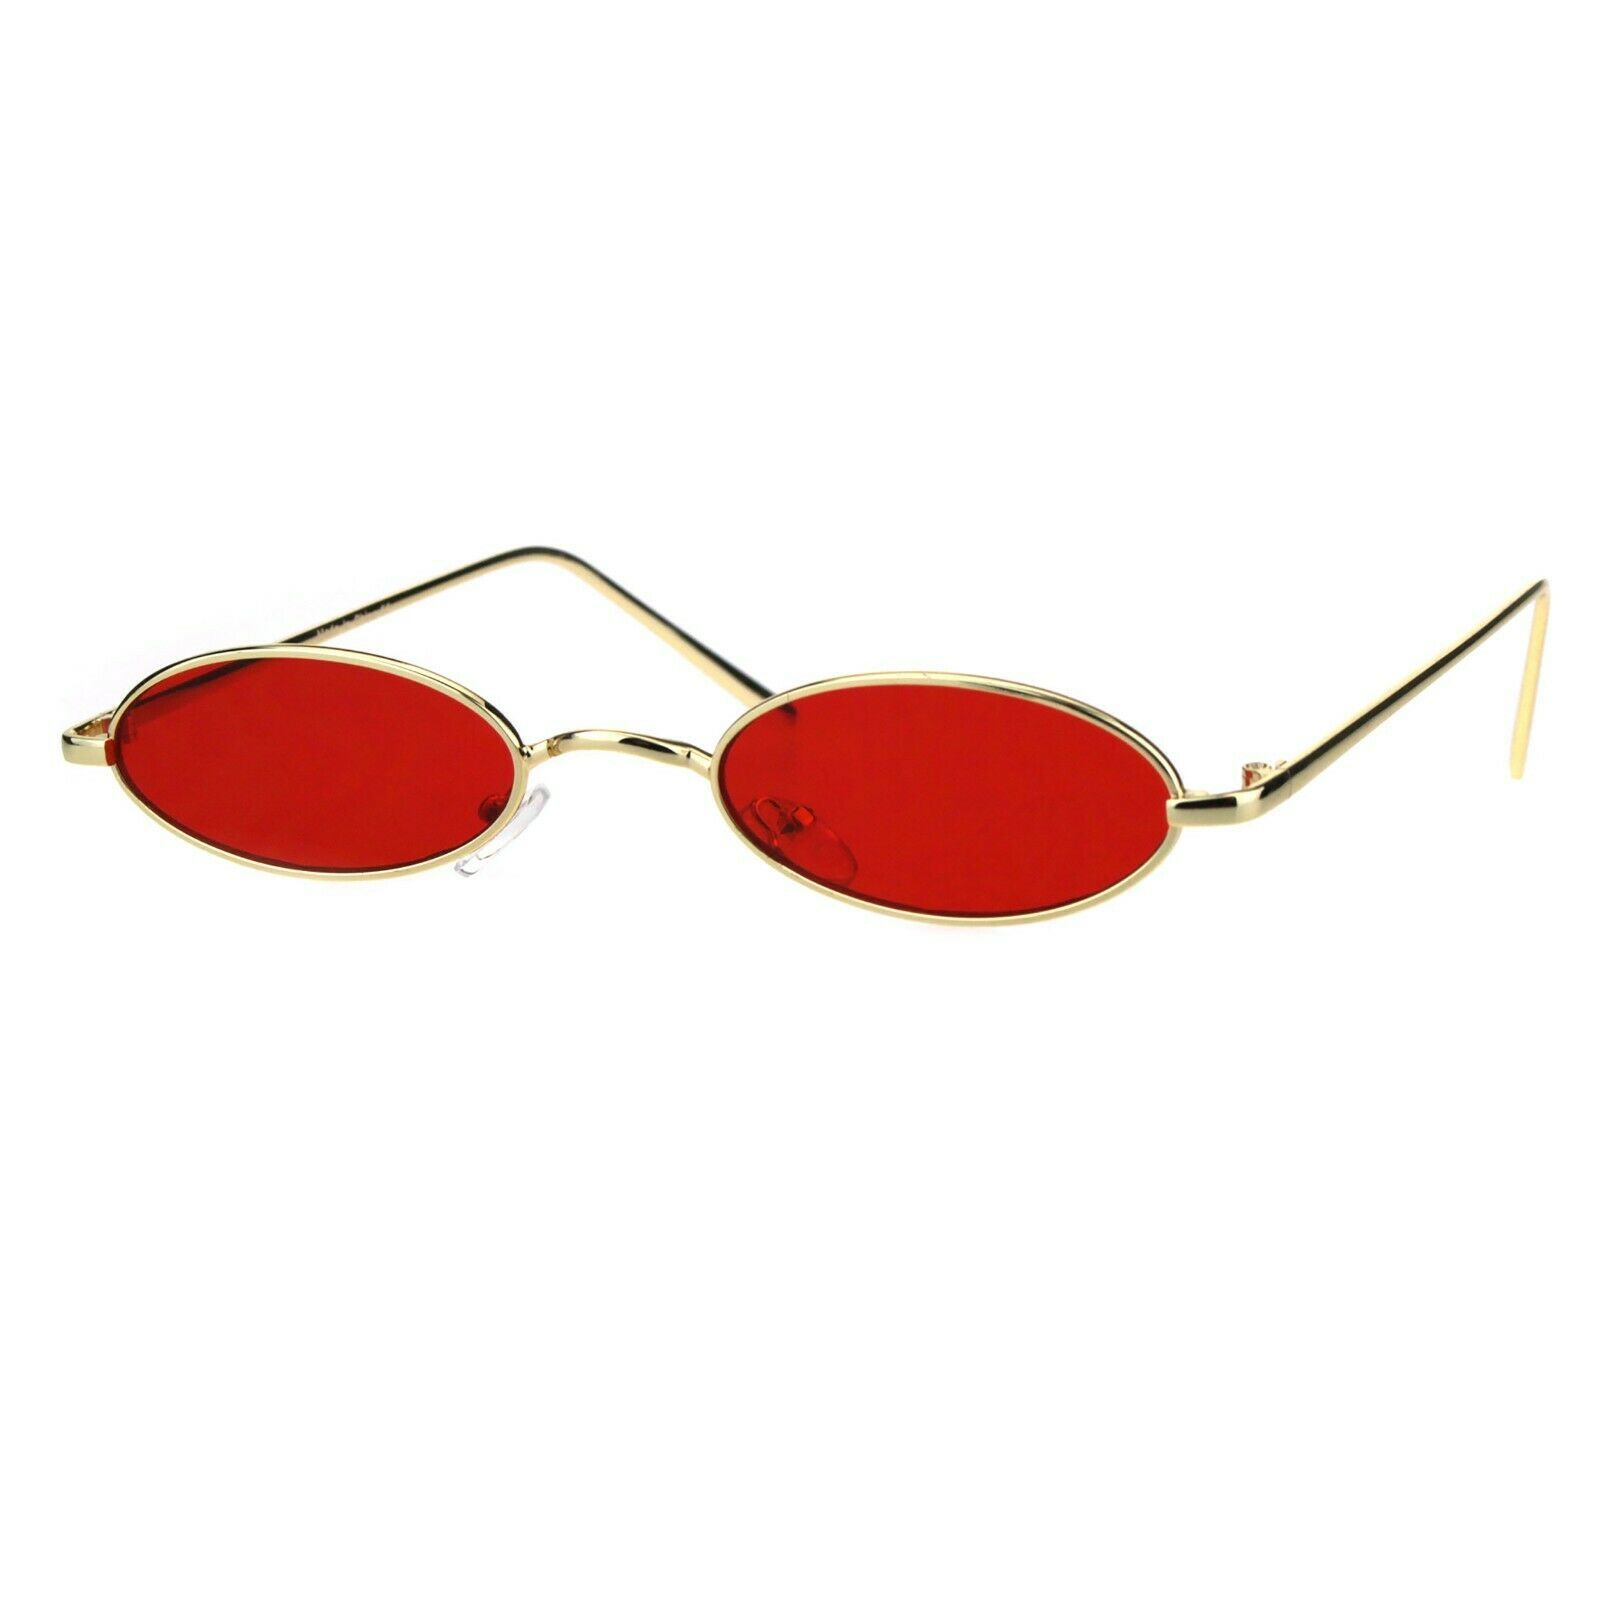 Thin Skinny Oval Sunglasses Gold Metal Small Frame Wide Bridge Low Fit Uv 400 Sunglasses 